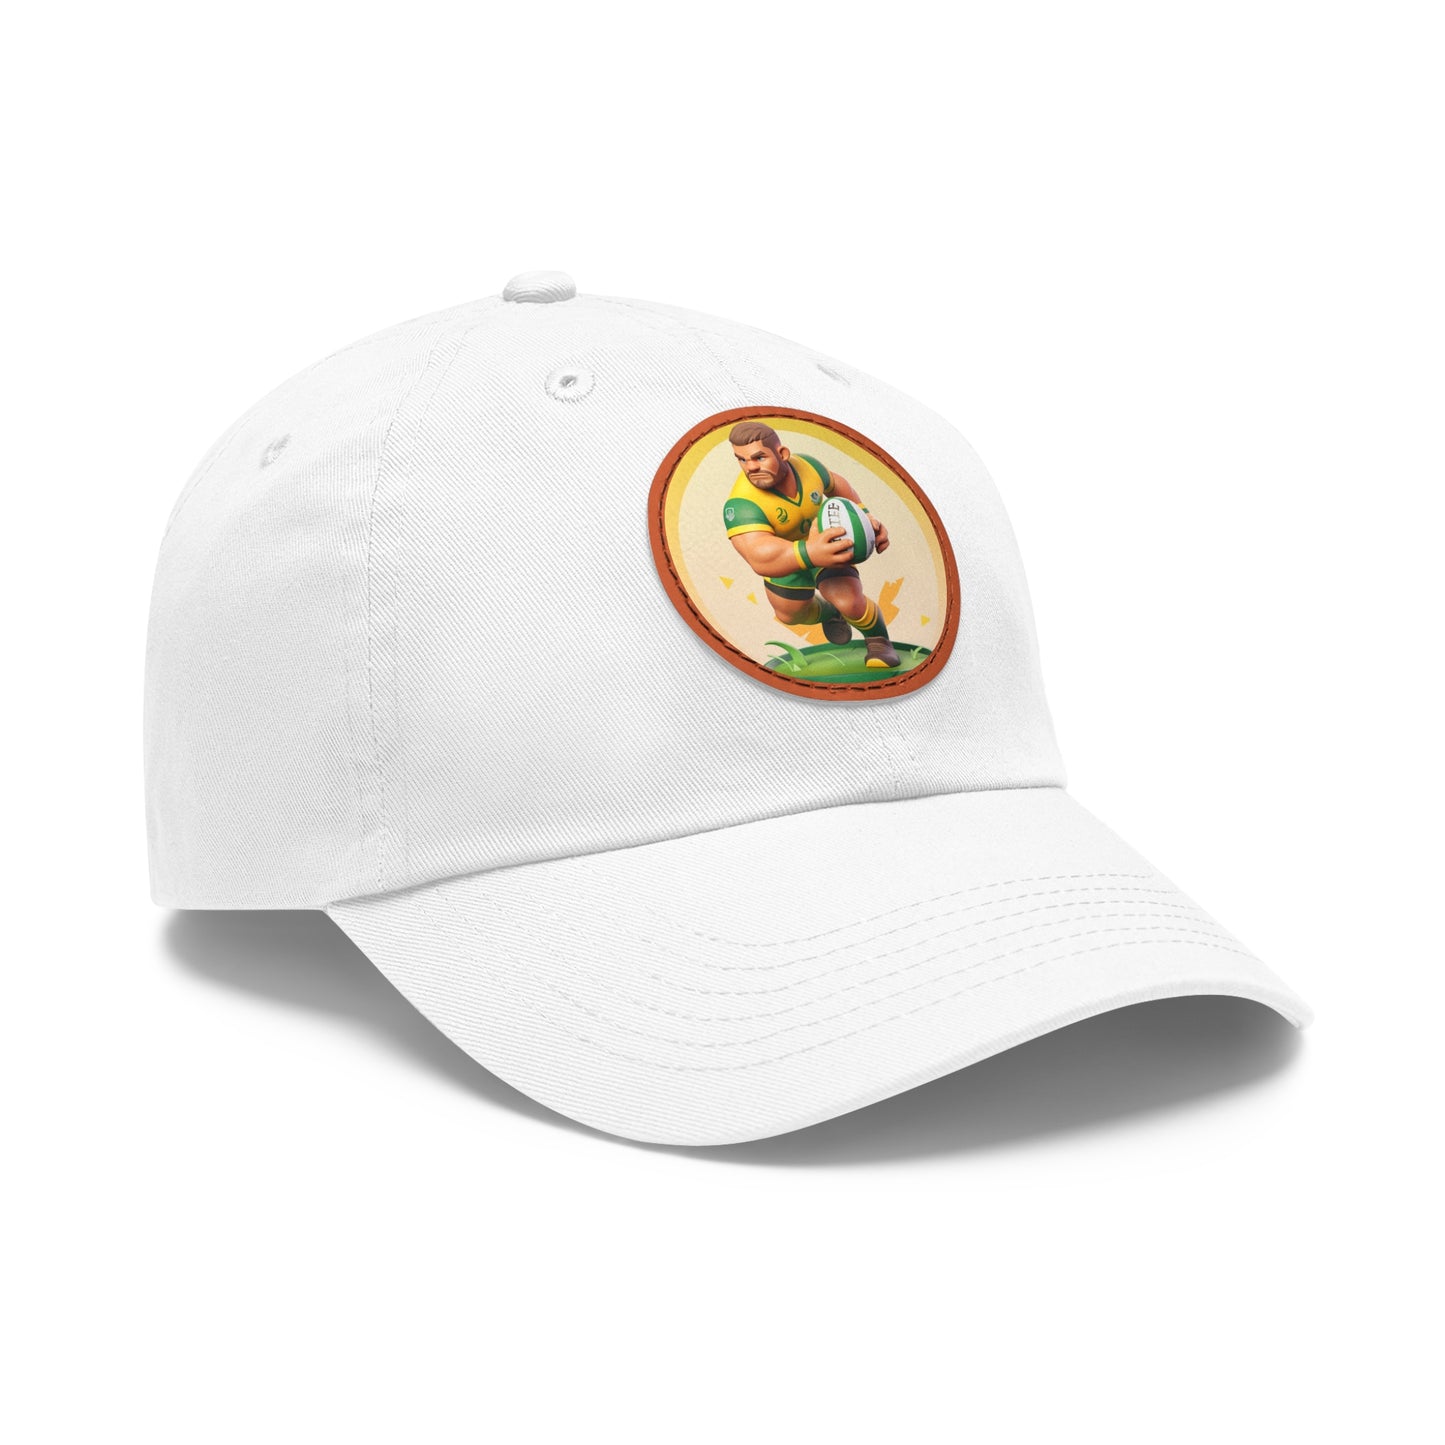 Australia hat